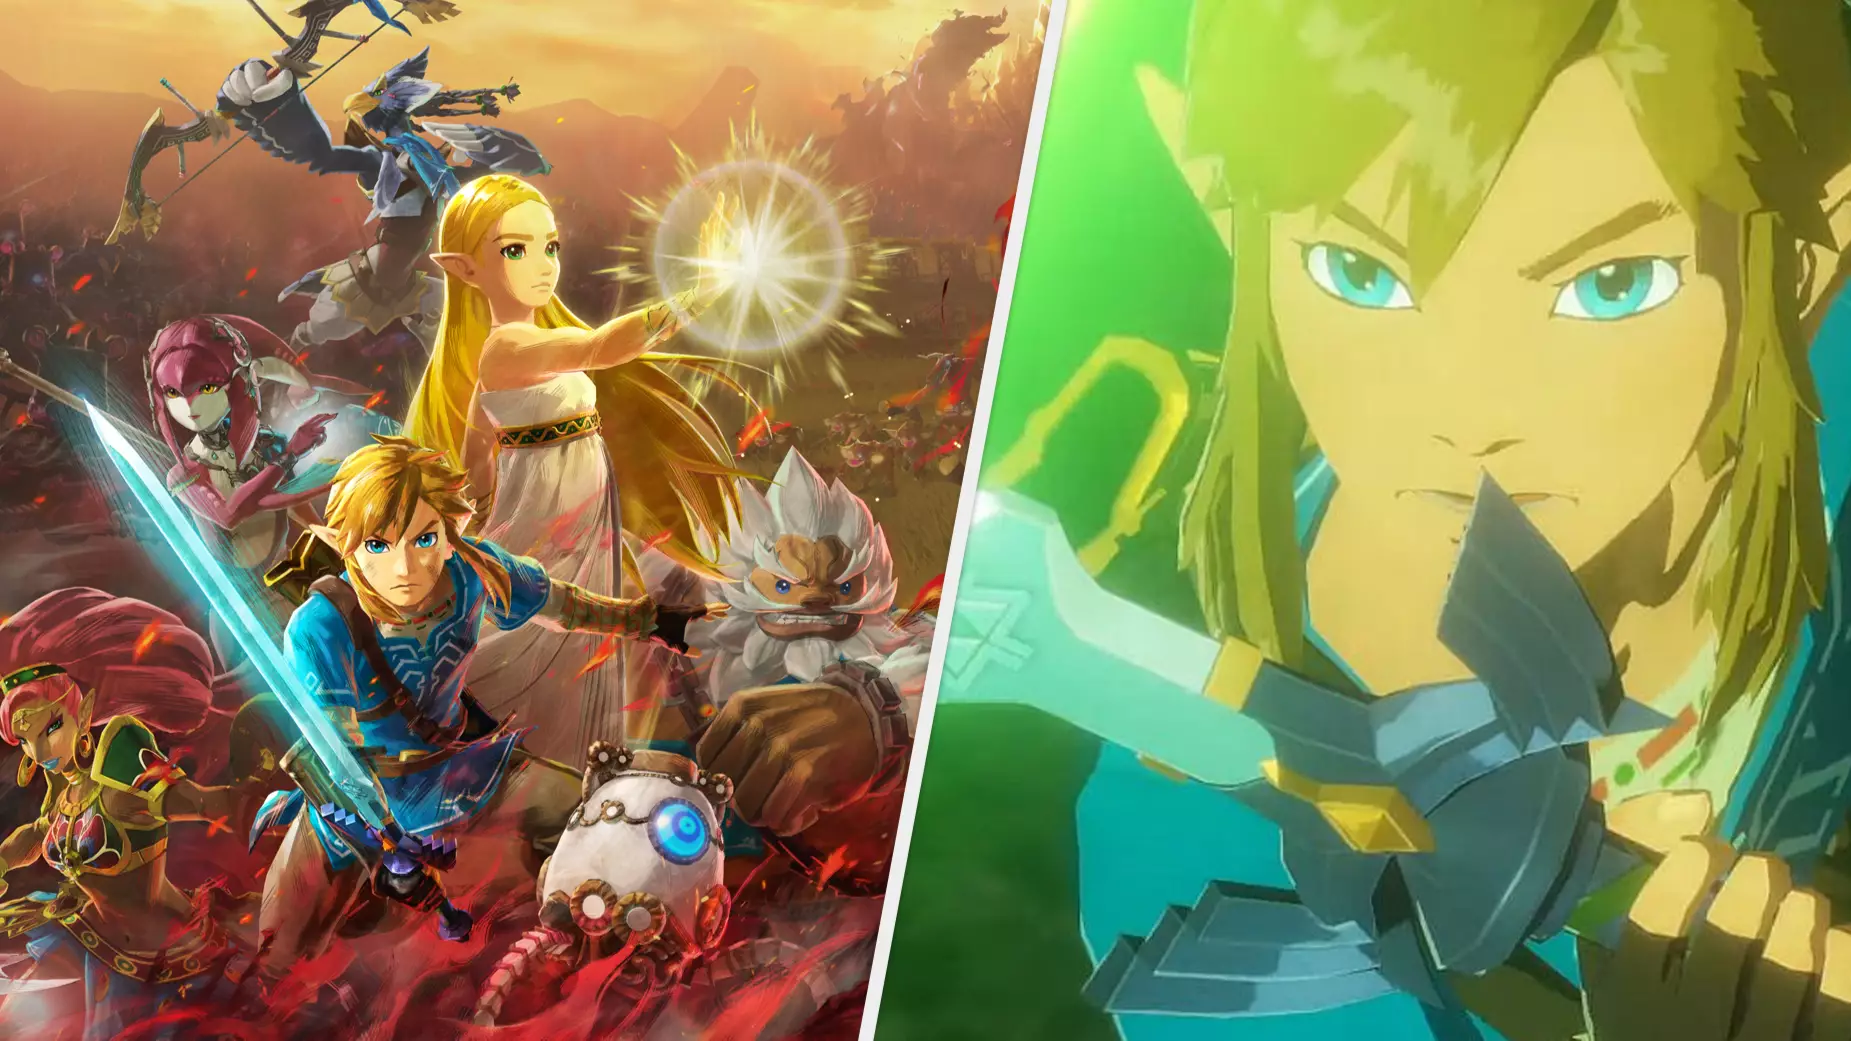 'The Legend Of Zelda: Breath Of The Wild' Prequel Announced By Nintendo